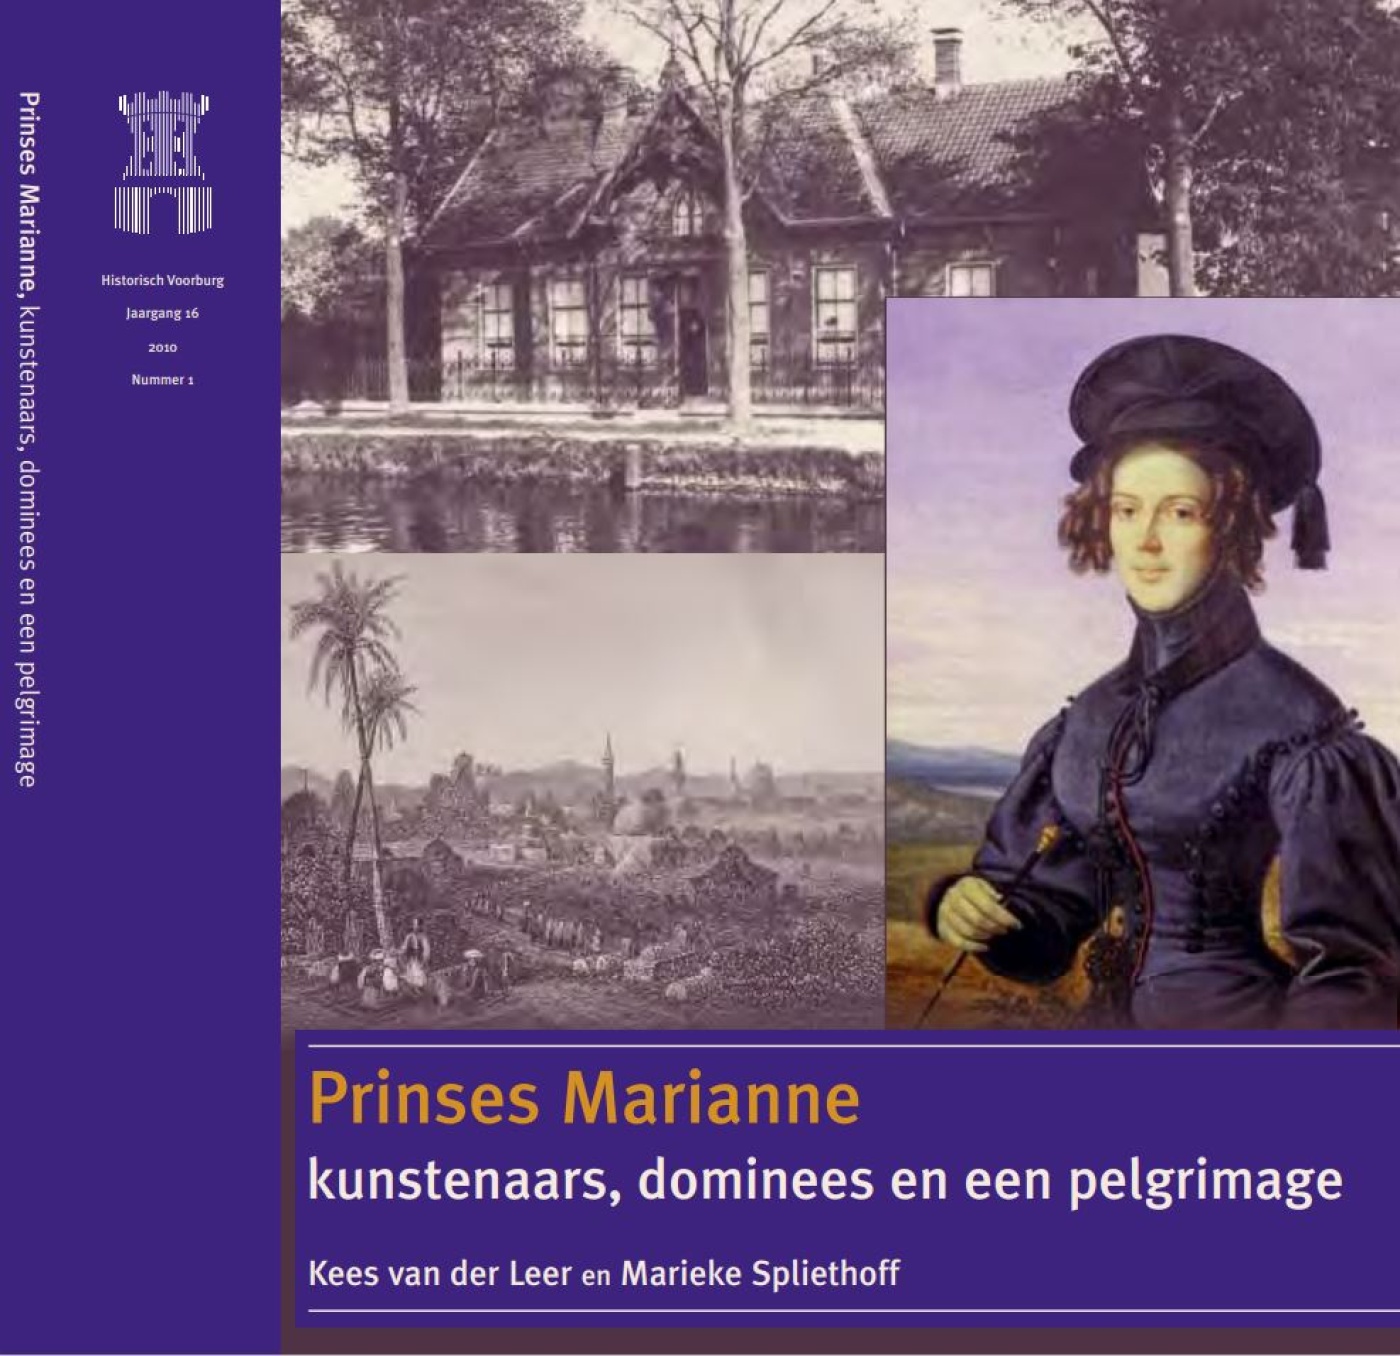 HV16-1 Prinses Marianne.JPG